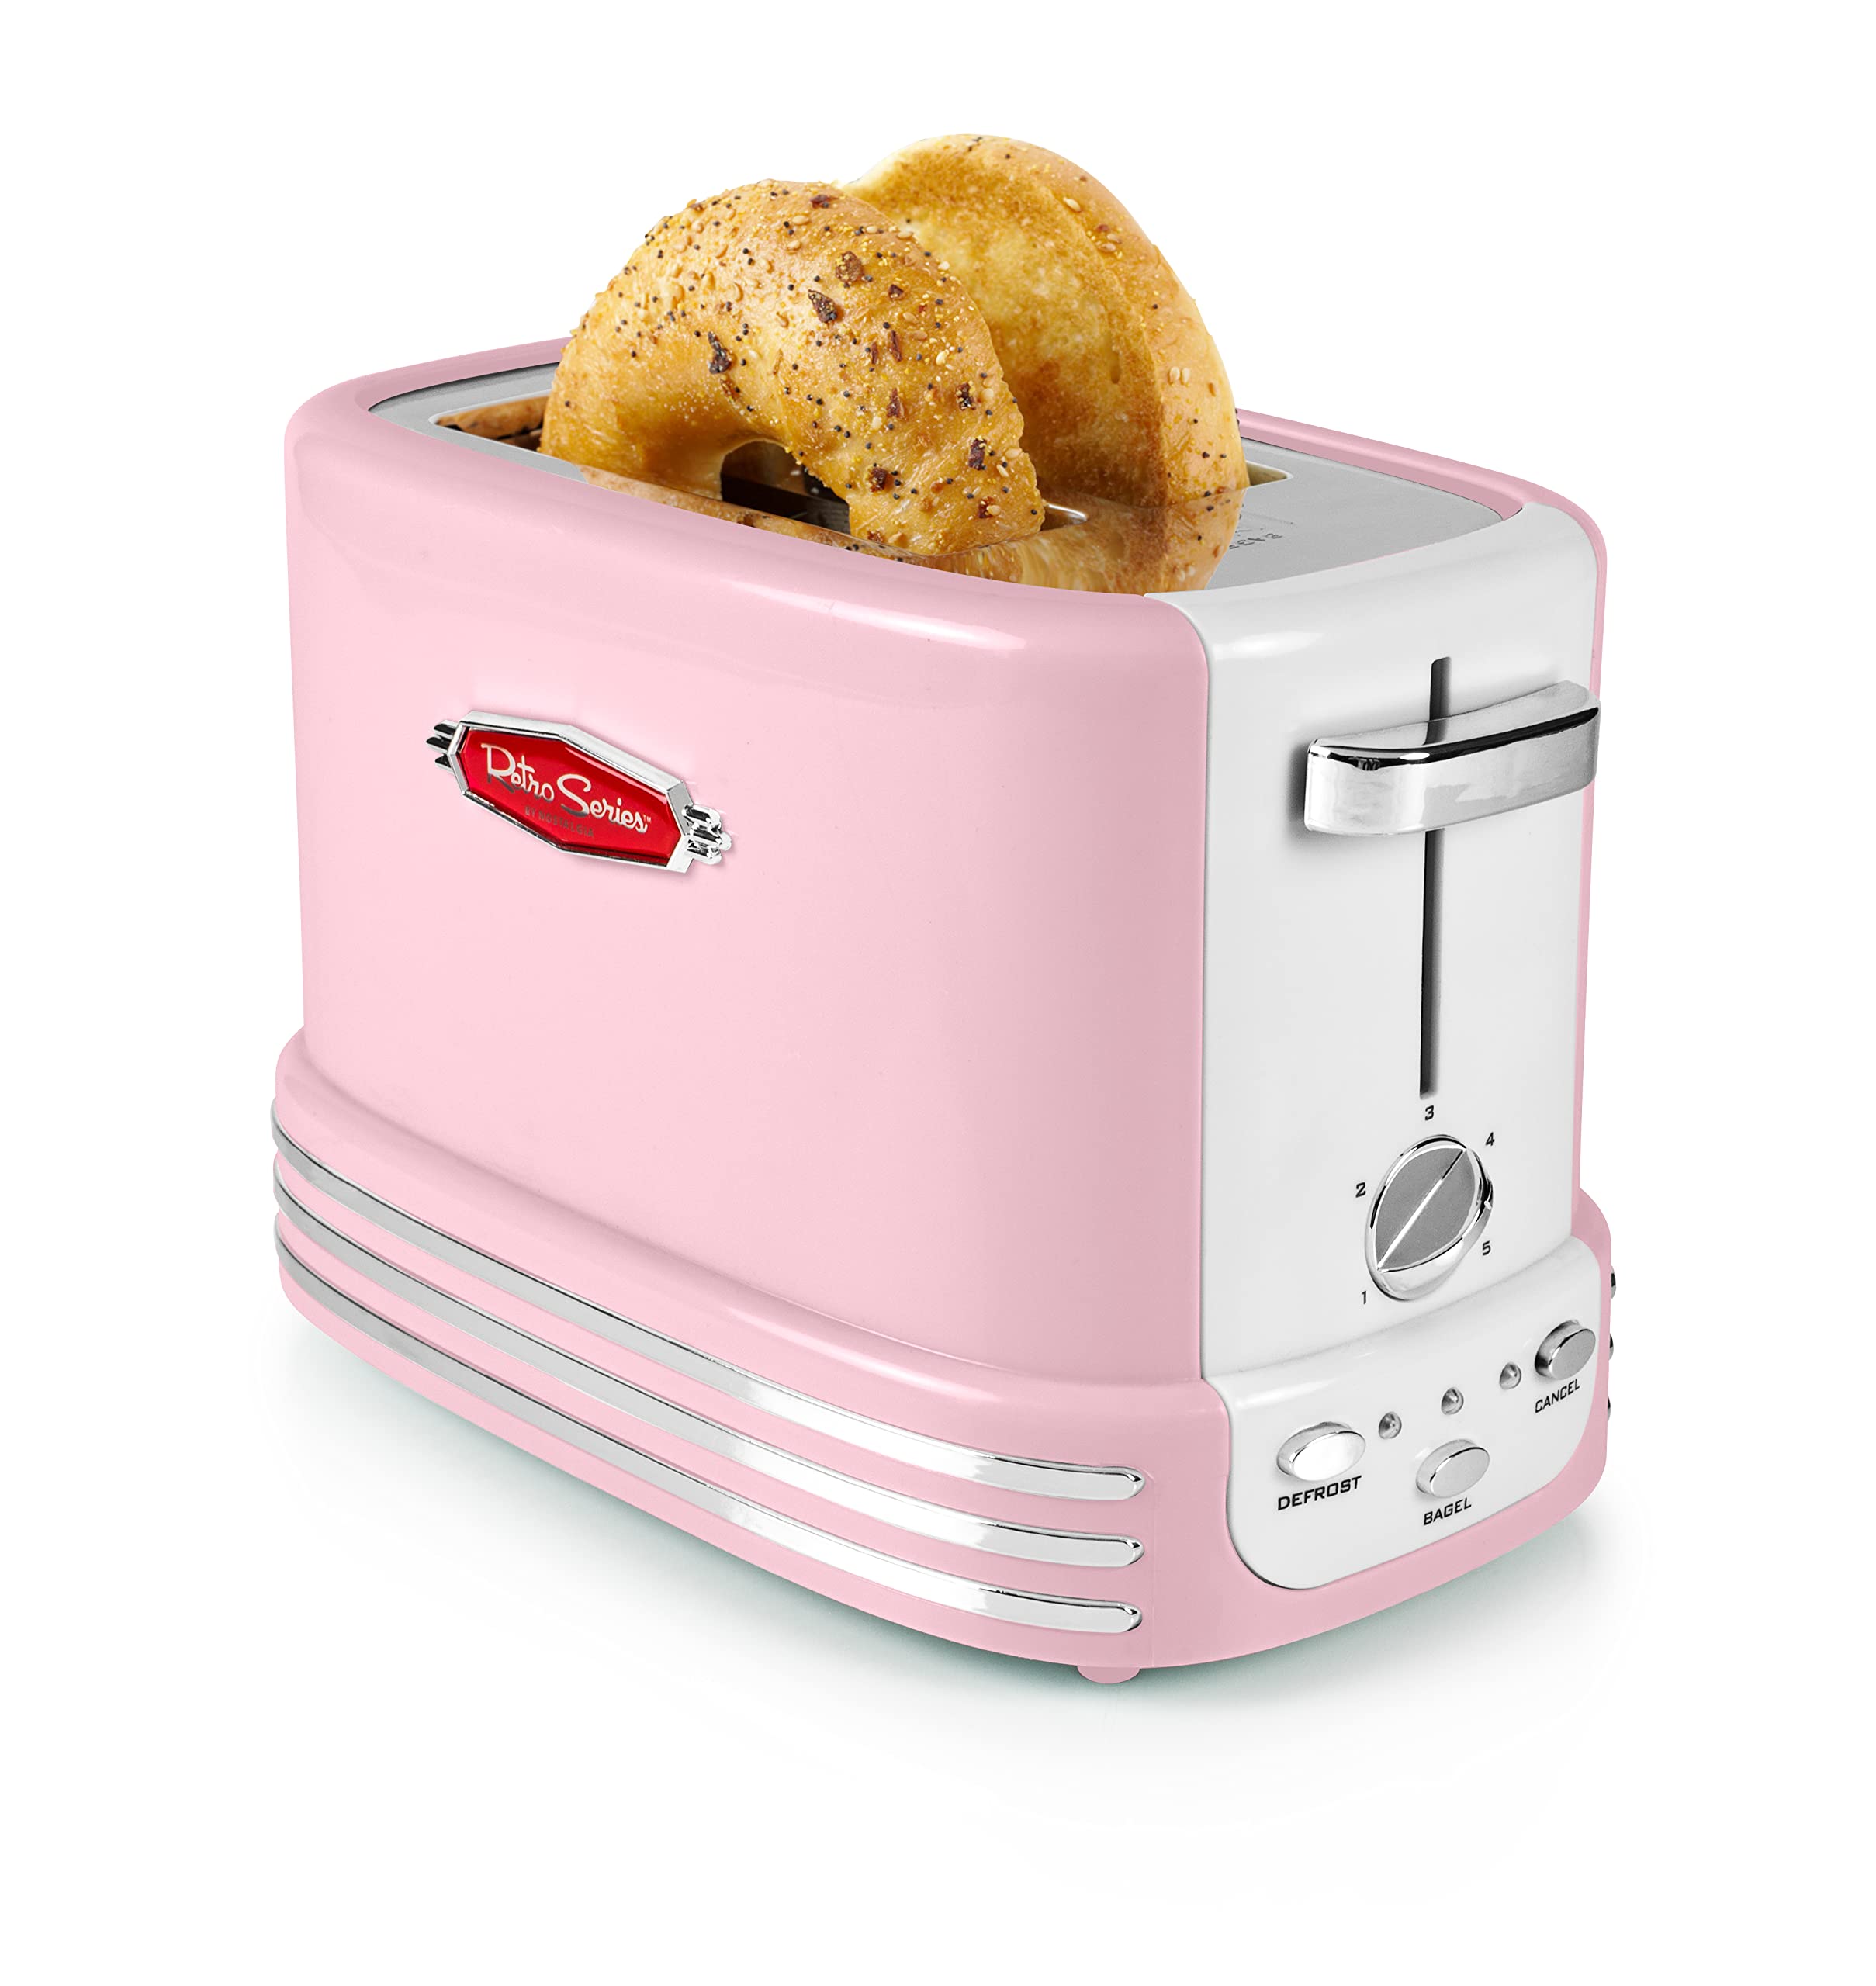 Nostalgia Retro Wide 2-Slice Toaster, Vintage Design With crumb Tray, cord Storage & 5 Toasting Levels, Pink